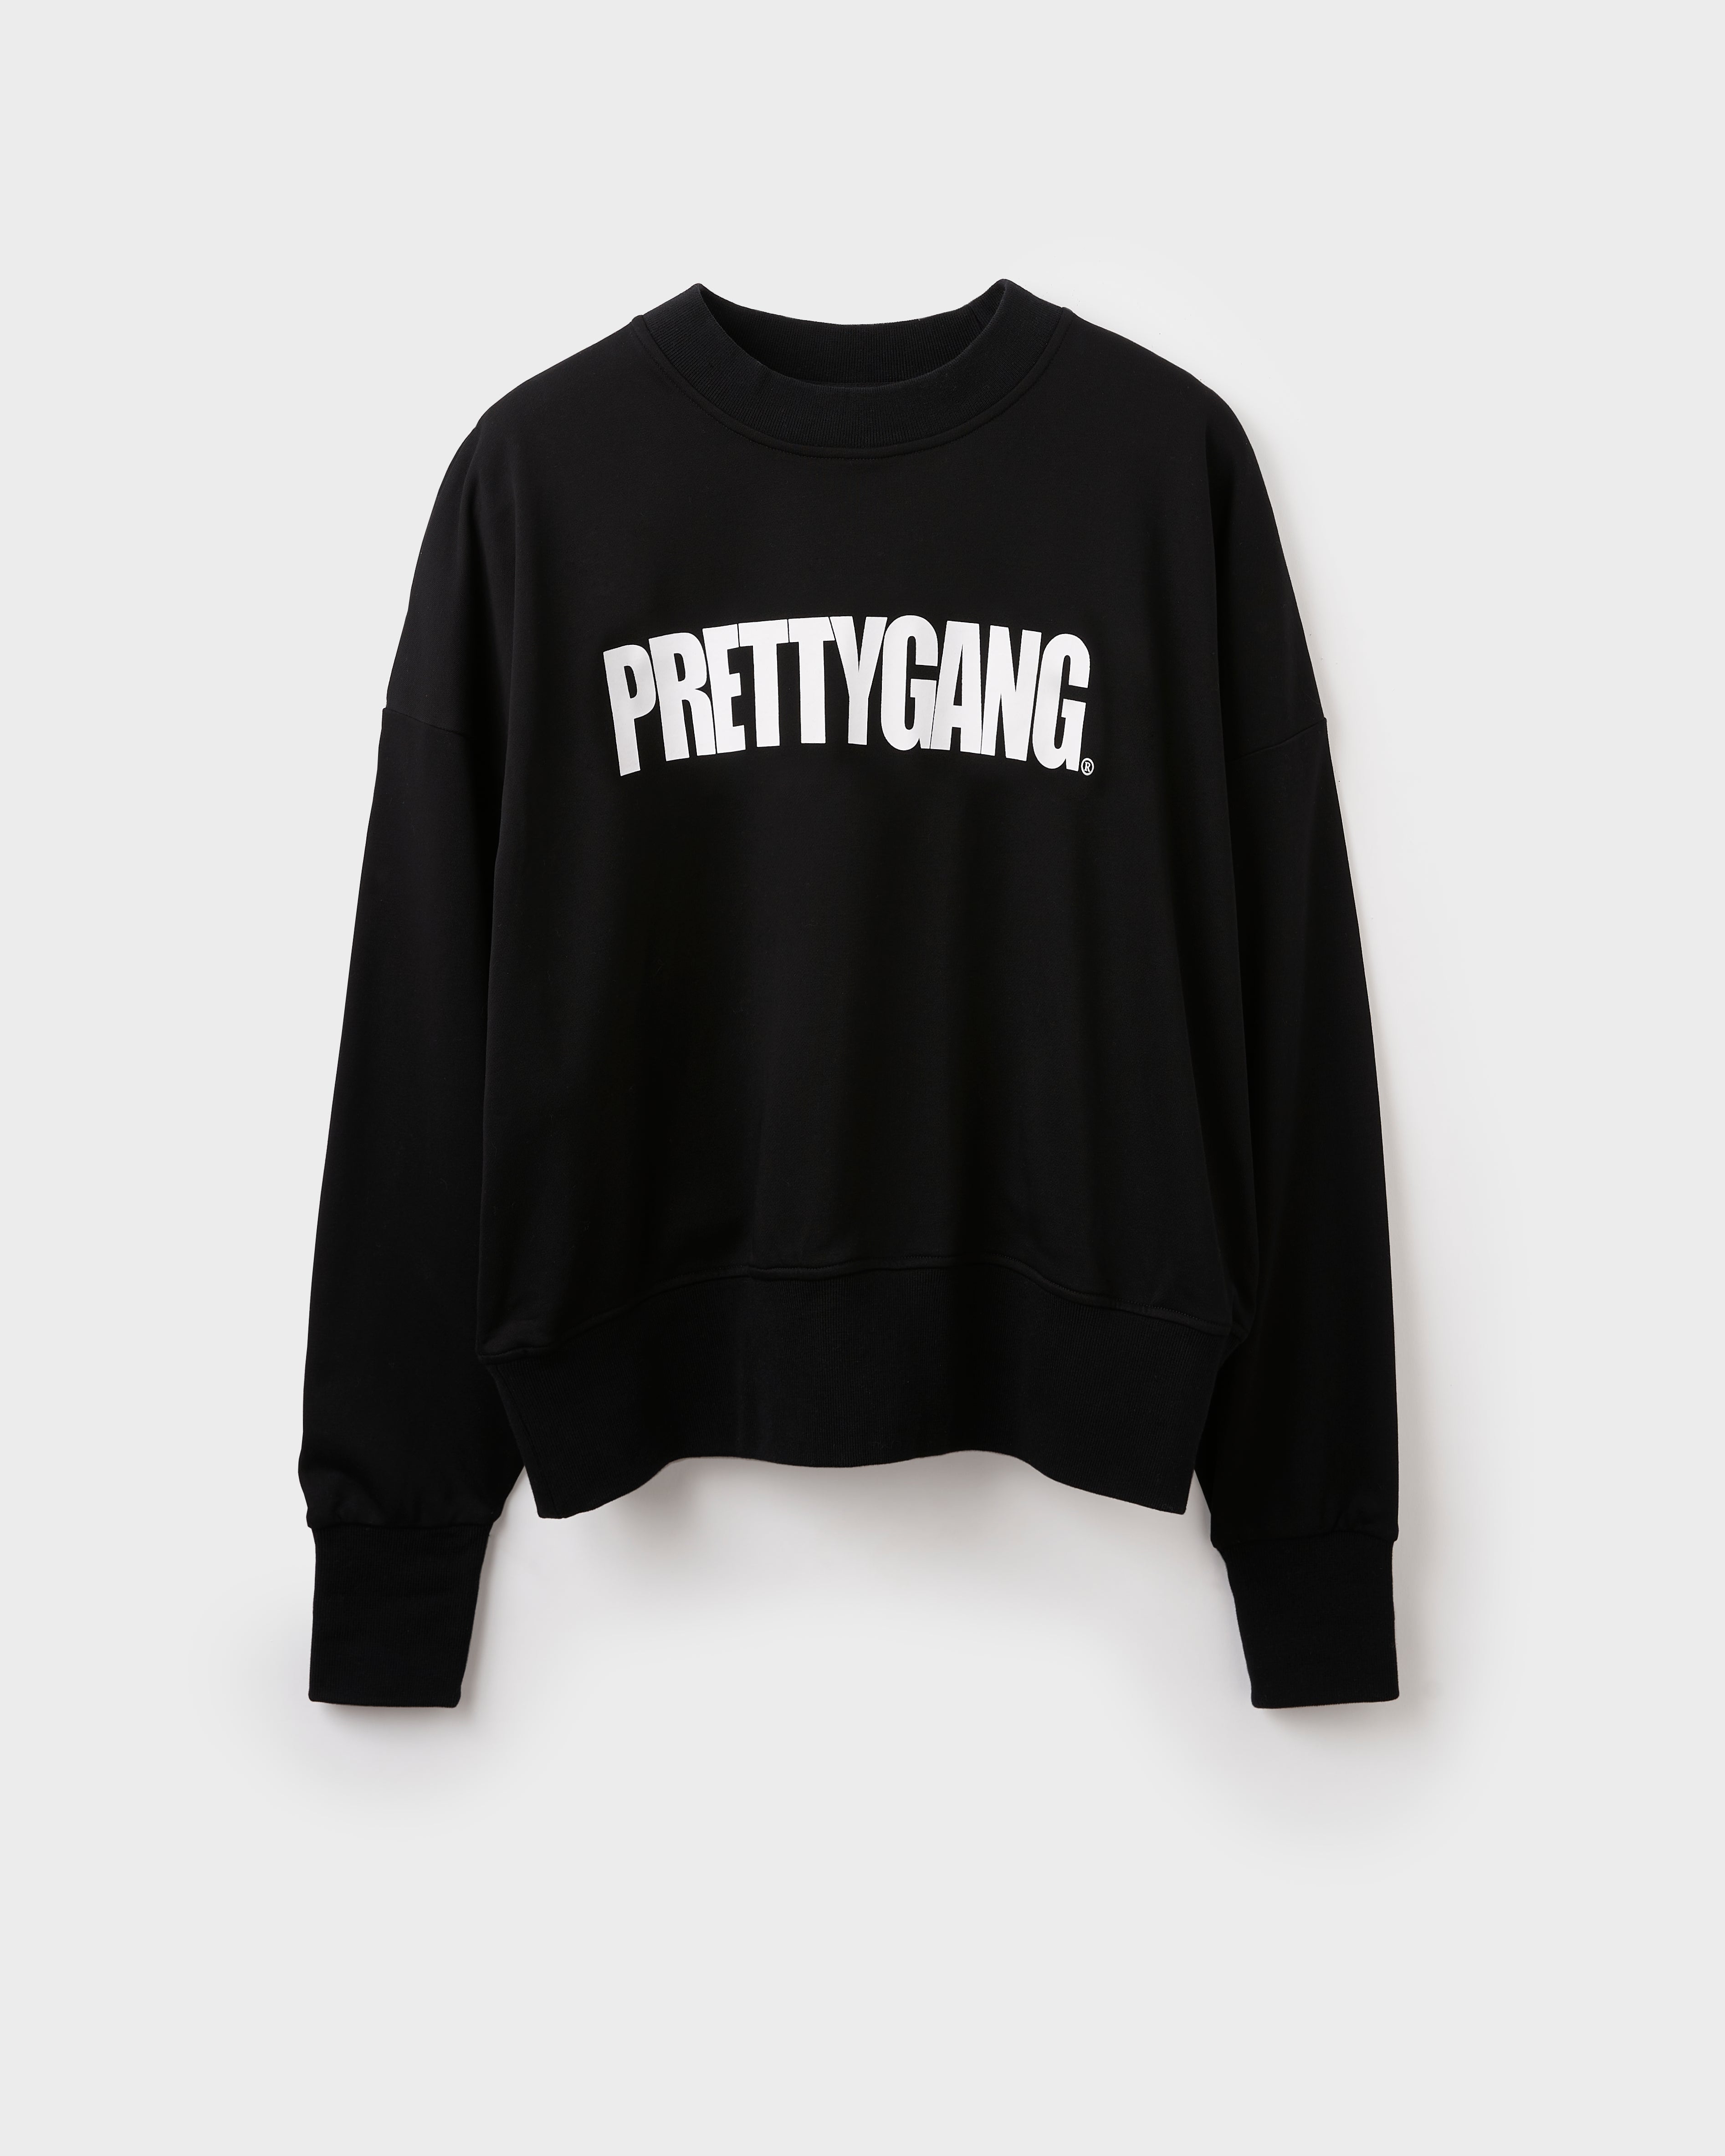 Black Sweater - prettygangofficial.com